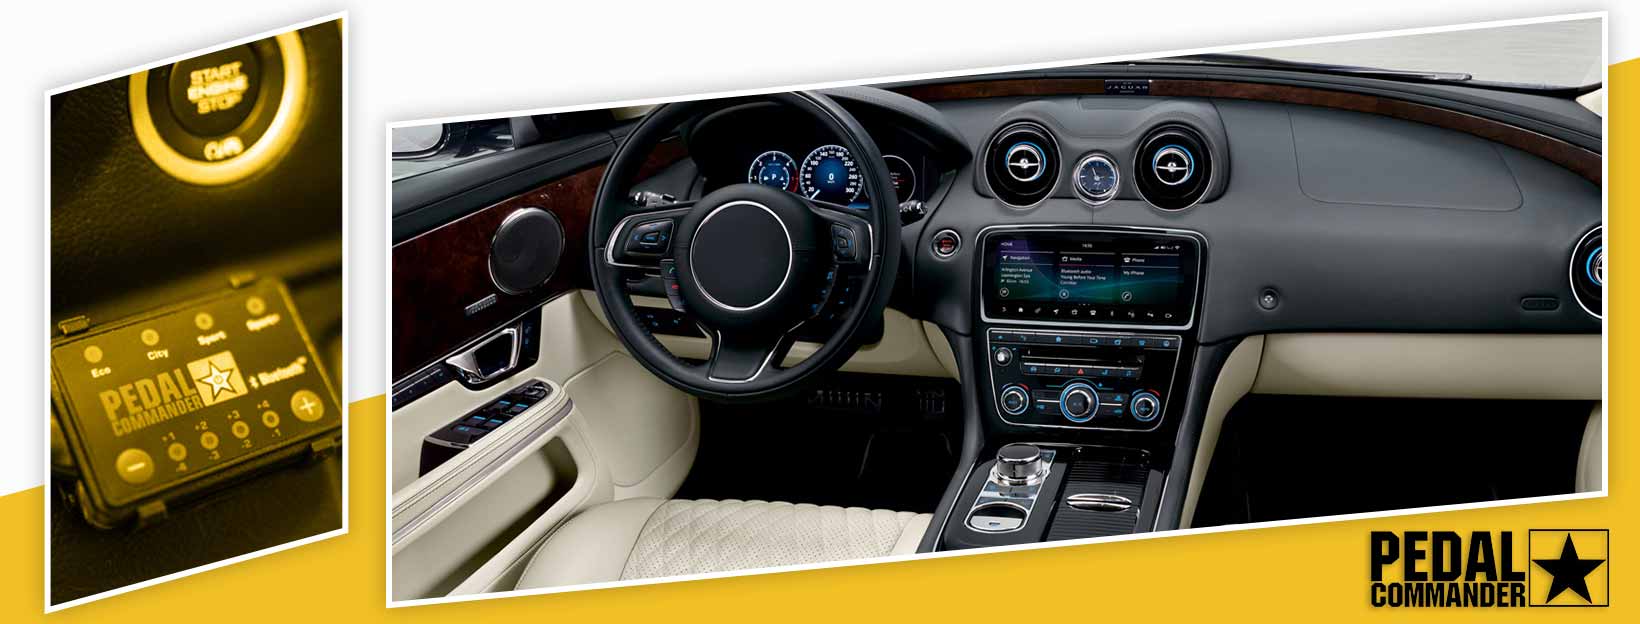 Pedal Commander for Jaguar XJ - interior